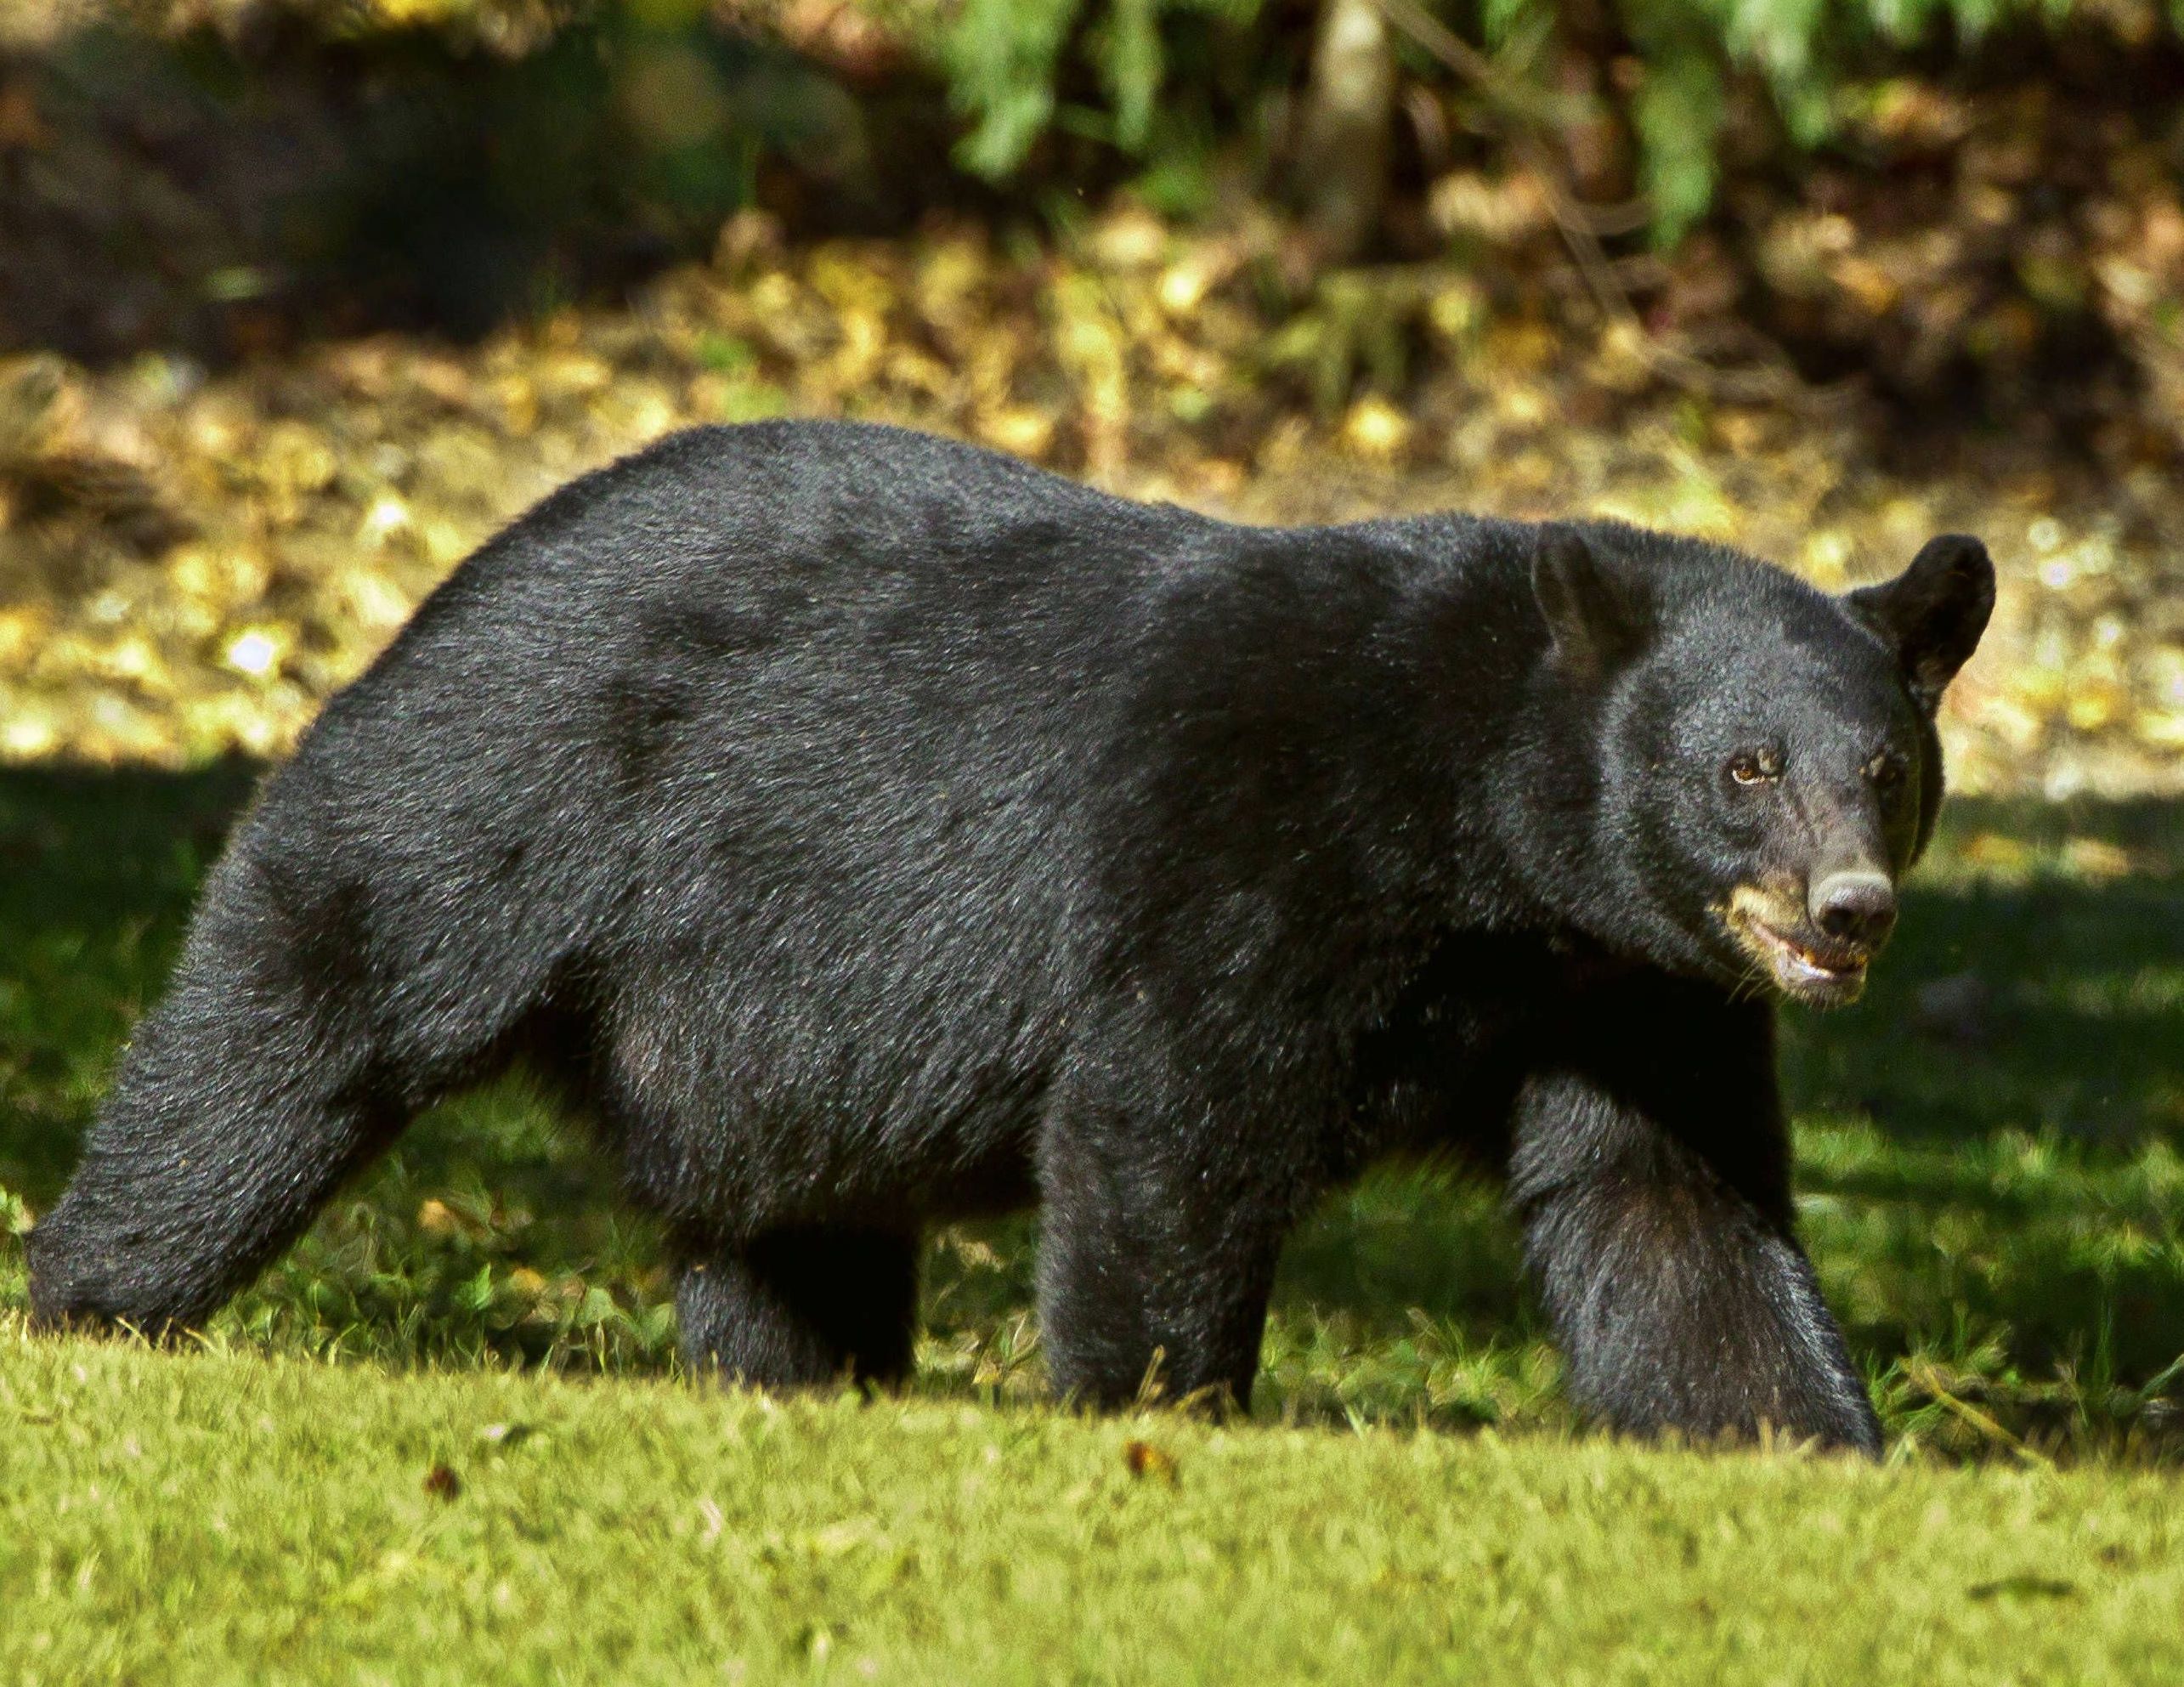 A large adult black bear plodding across a grassy field